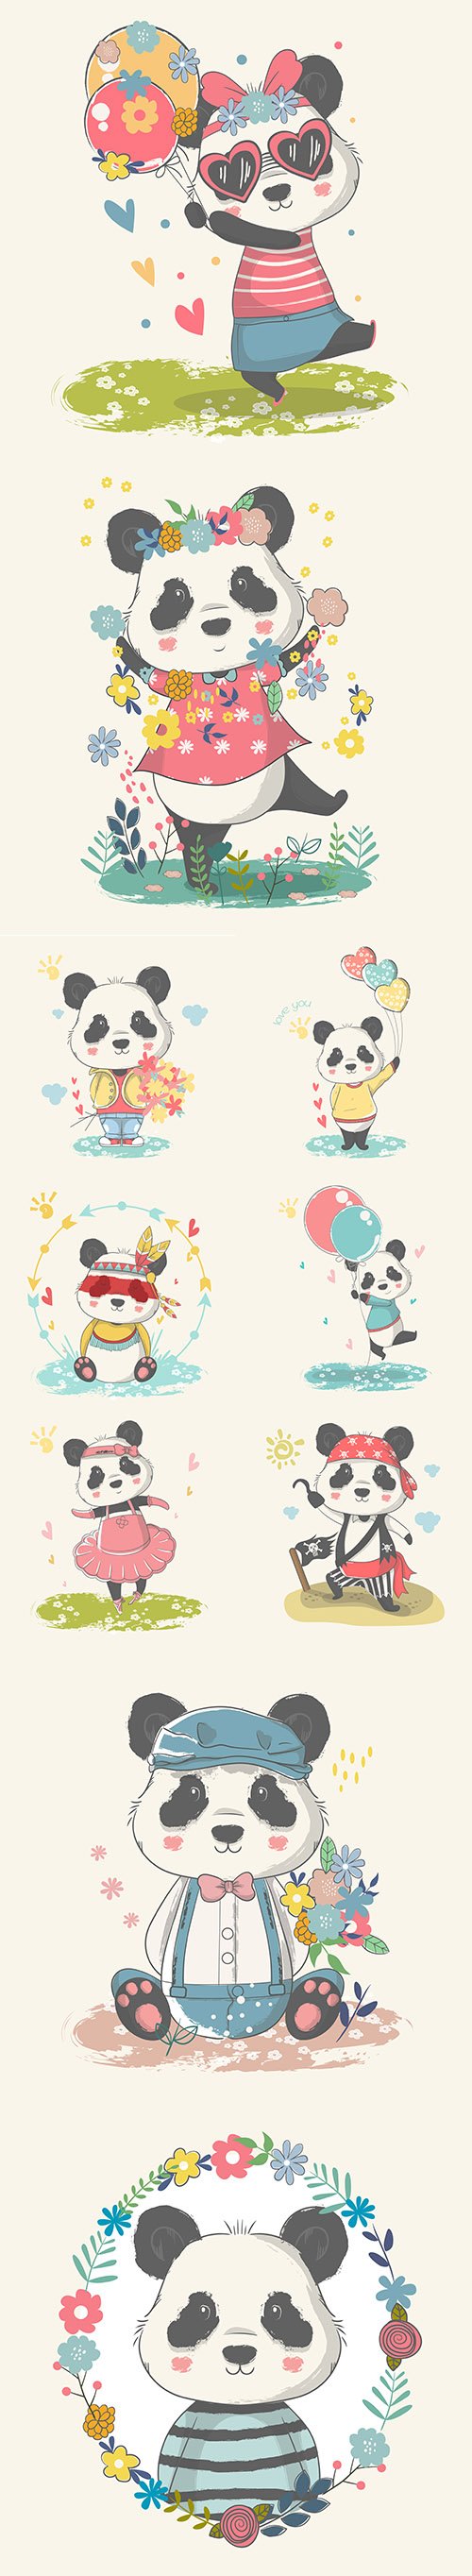 Hand-Drawn Illustration - Funny Baby Panda